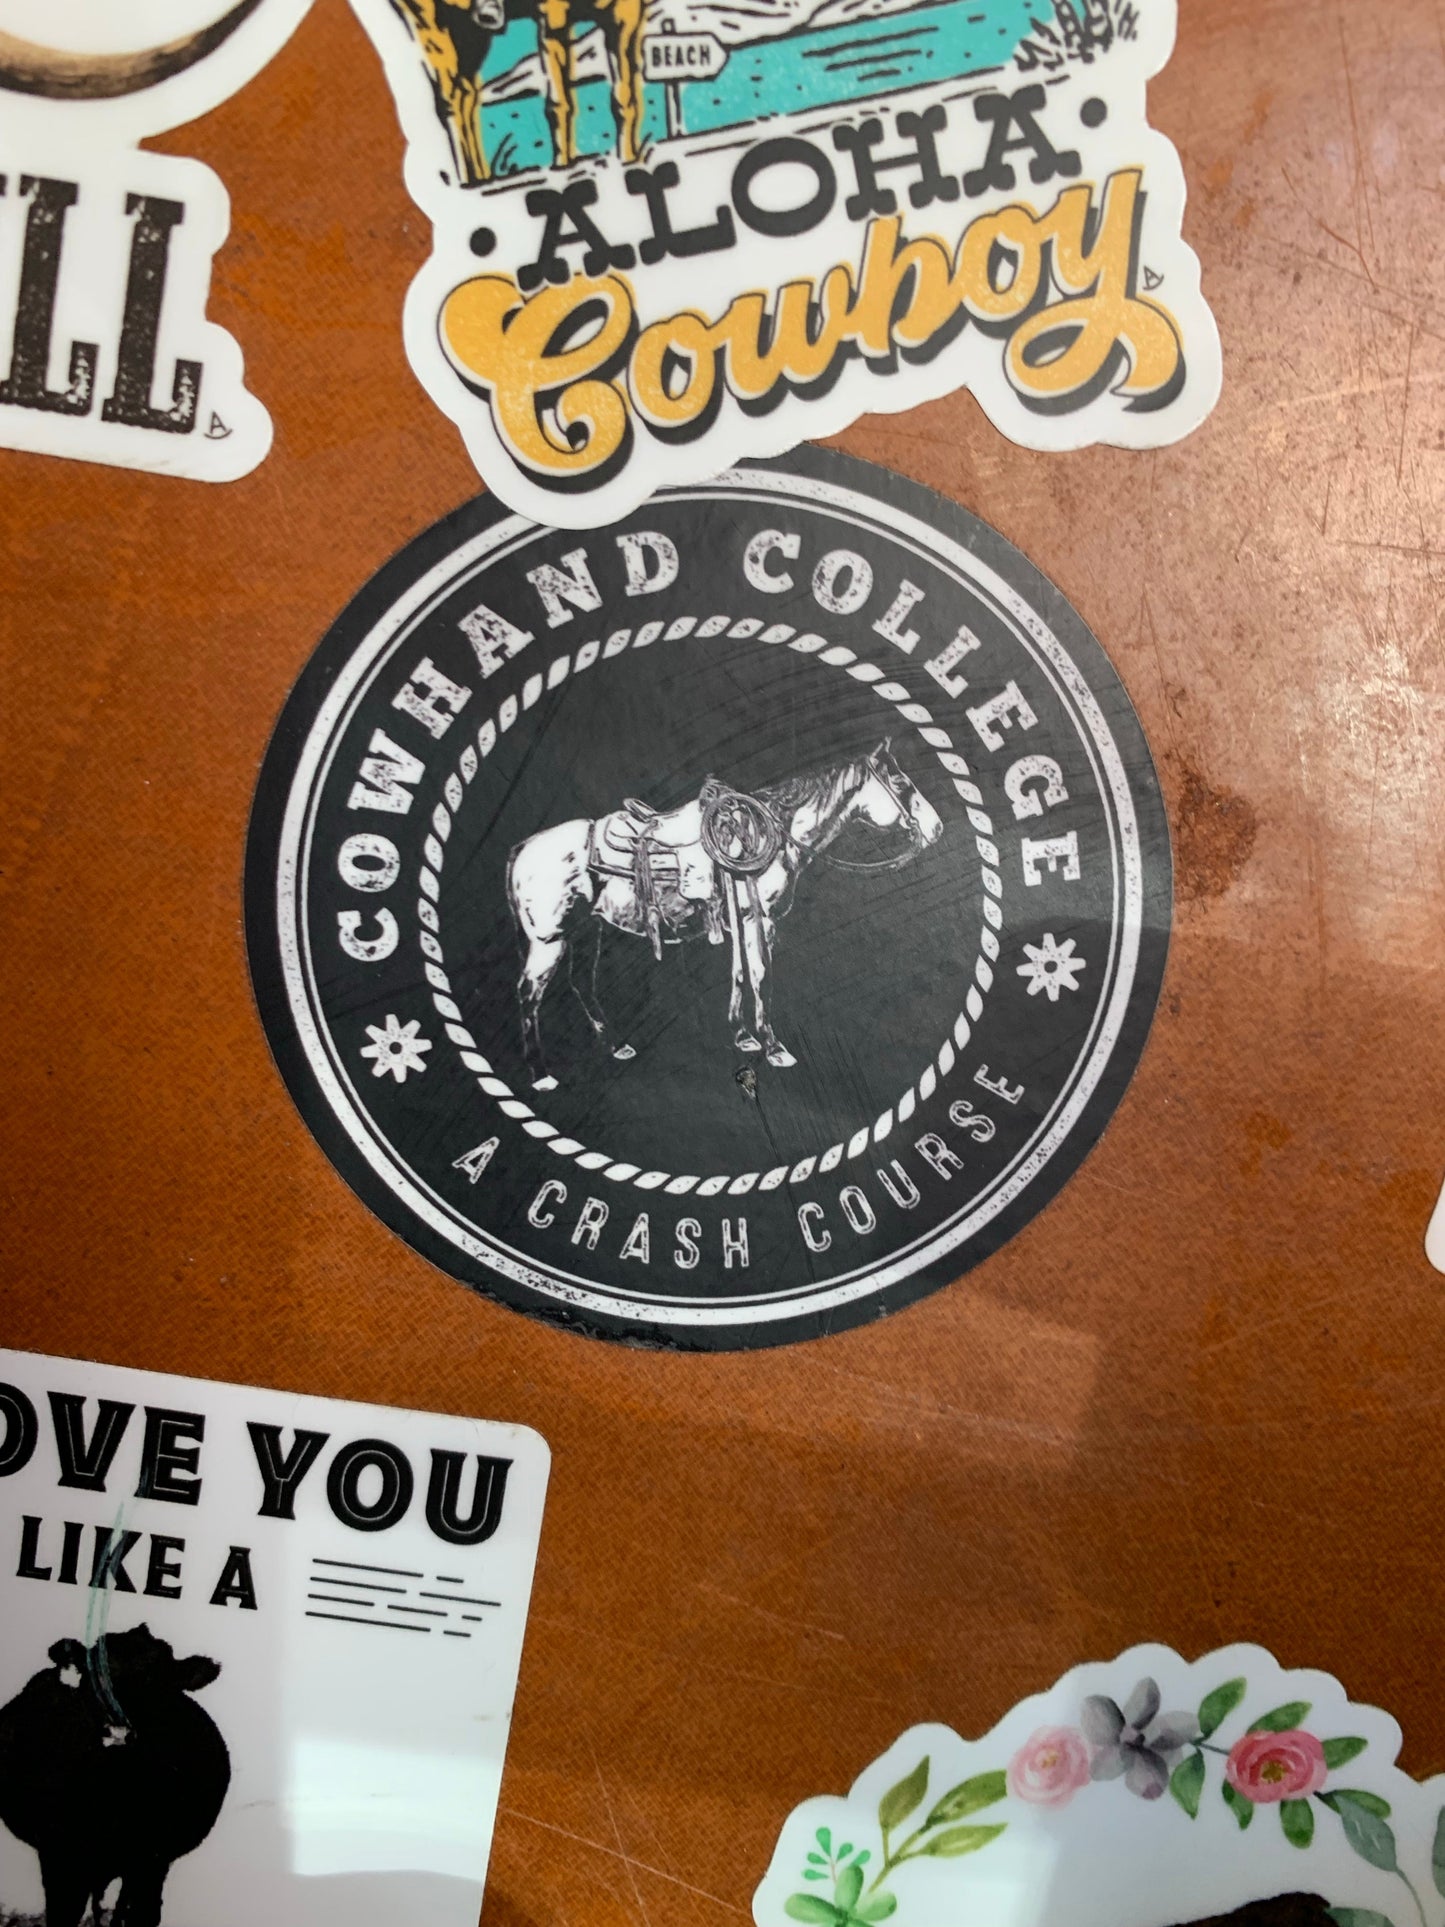 Cowhand College * A Crash Course sticker